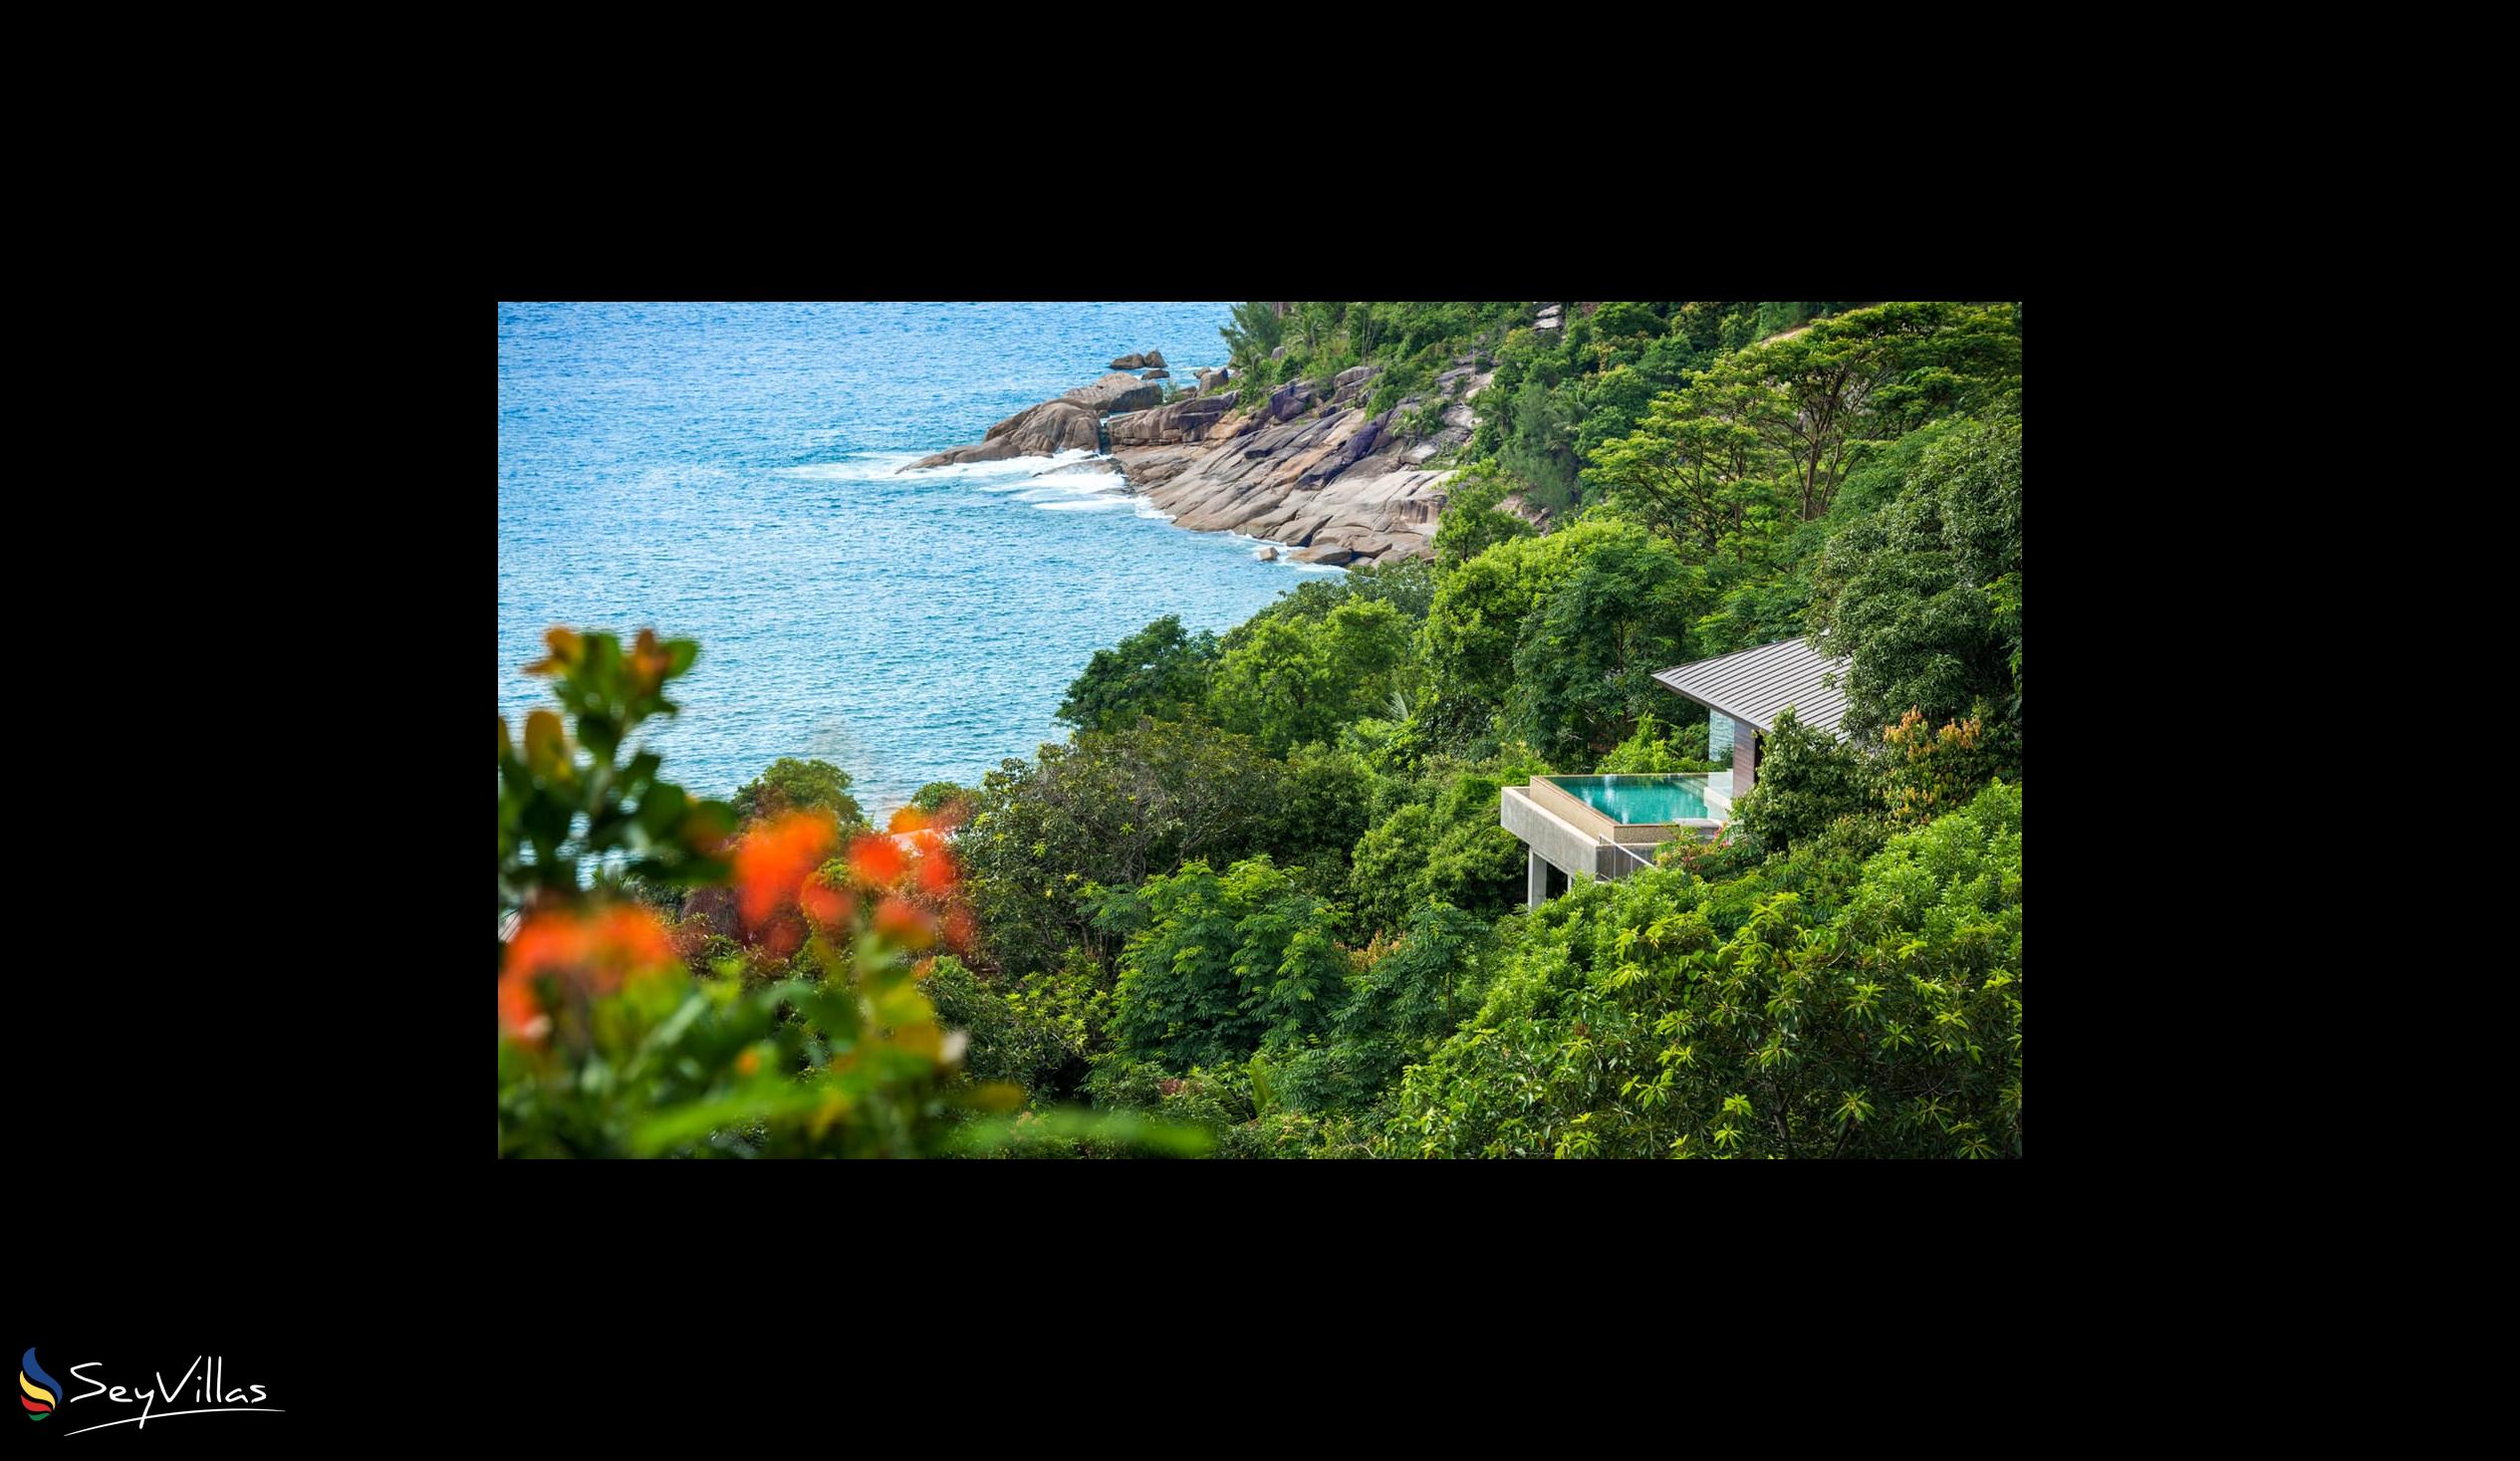 Photo 41: Four Seasons Resort - Hilltop Ocean View Villa - Mahé (Seychelles)